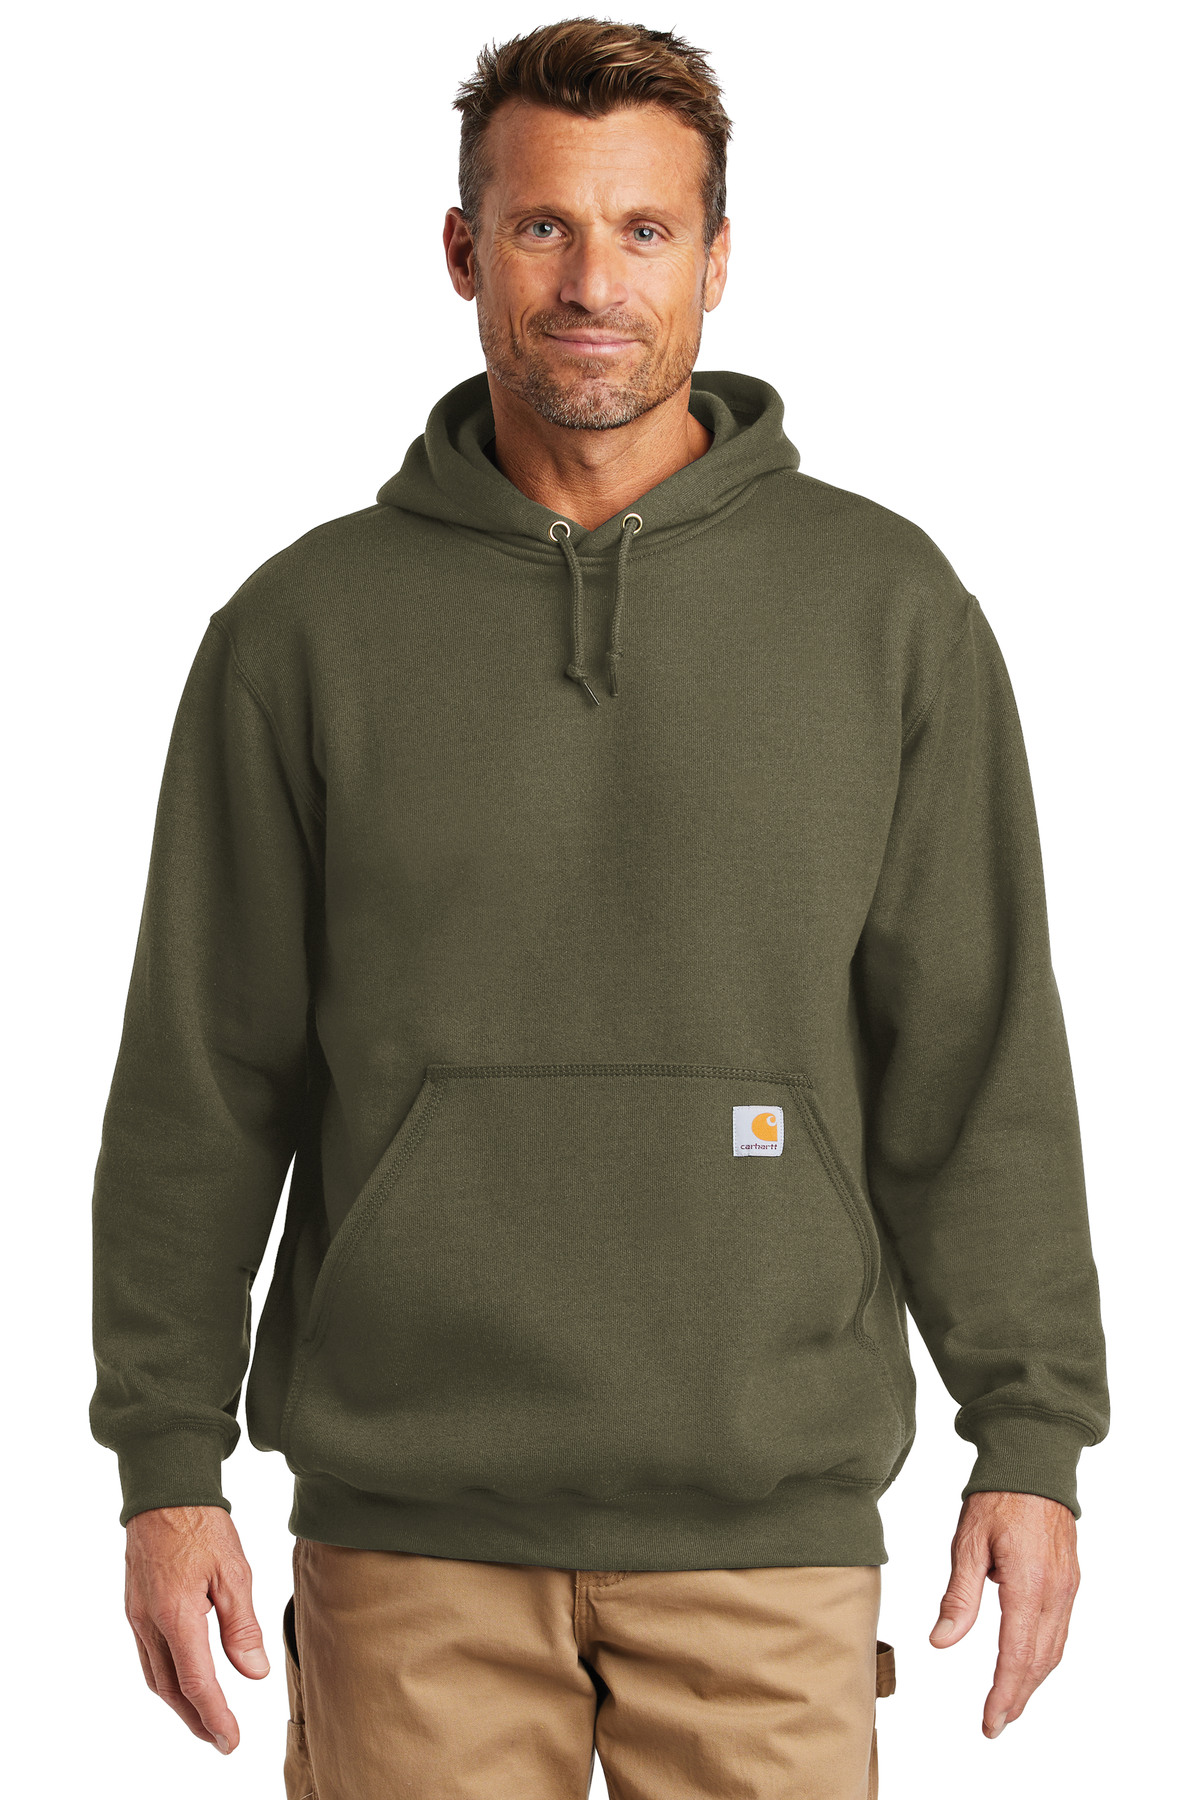 Carhartt Embroidered Men's Midweight Hooded Sweatshirt | Sweatshirts ...